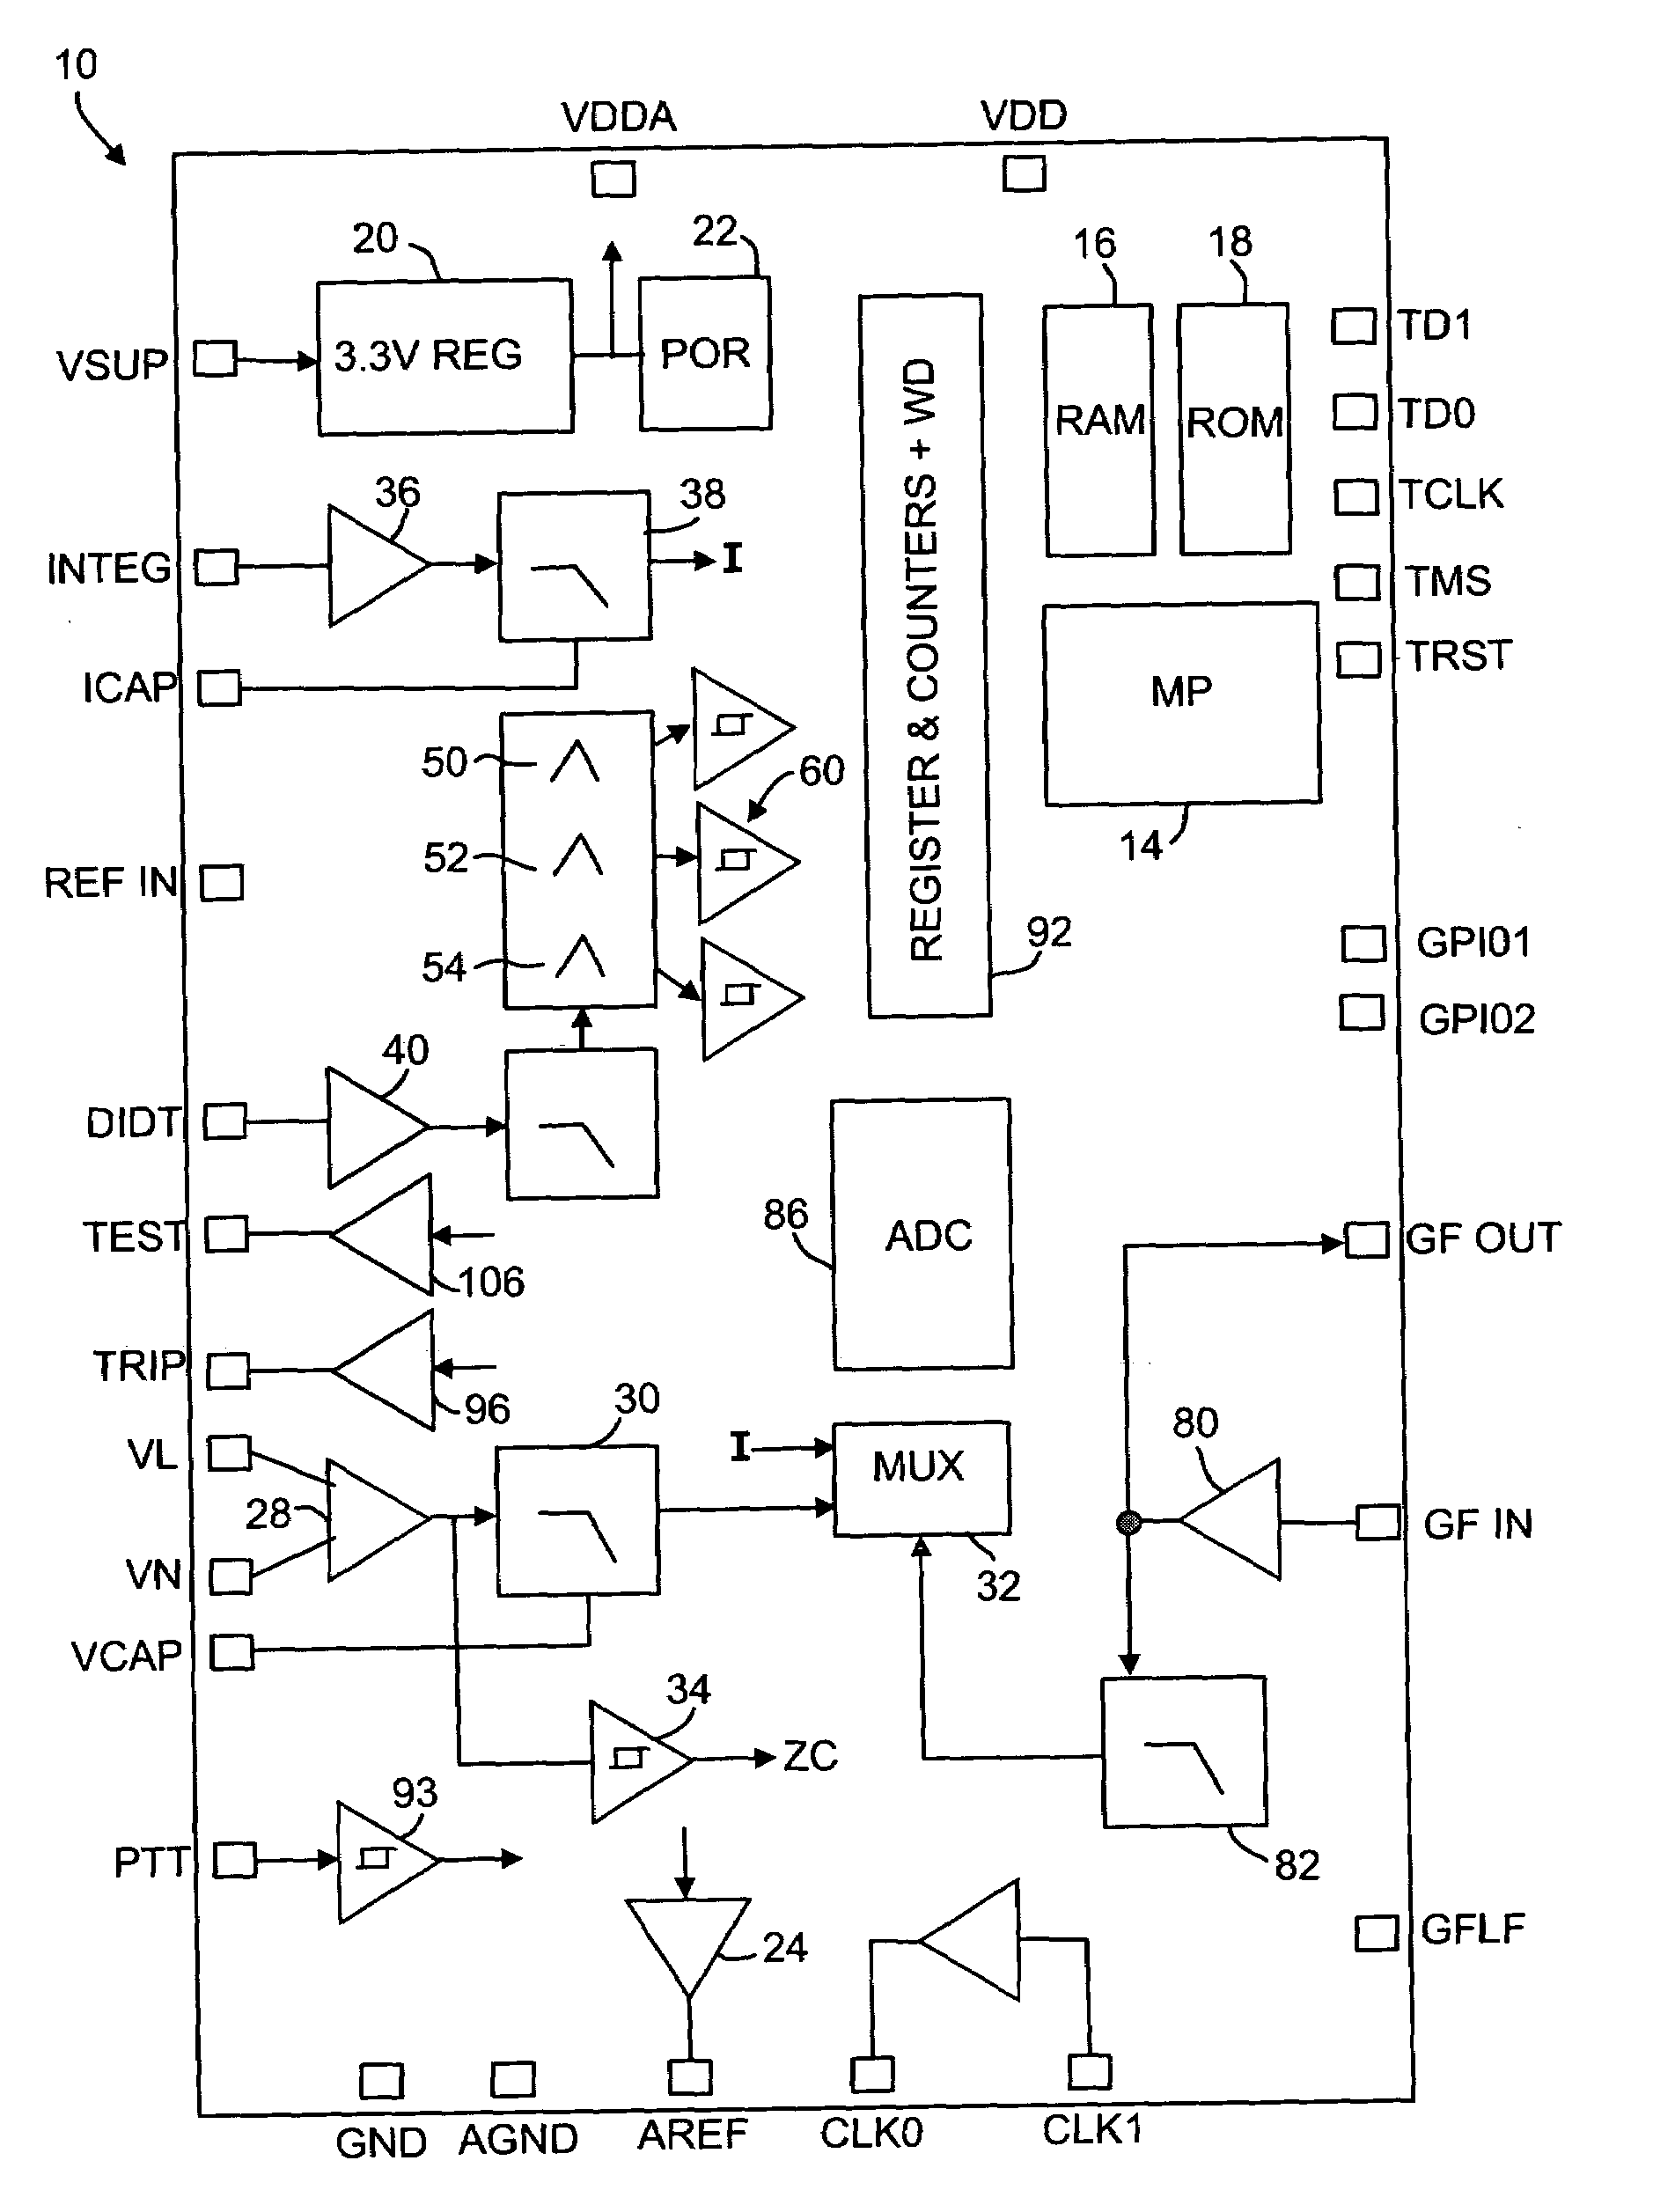 Arc fault circuit interrupter system